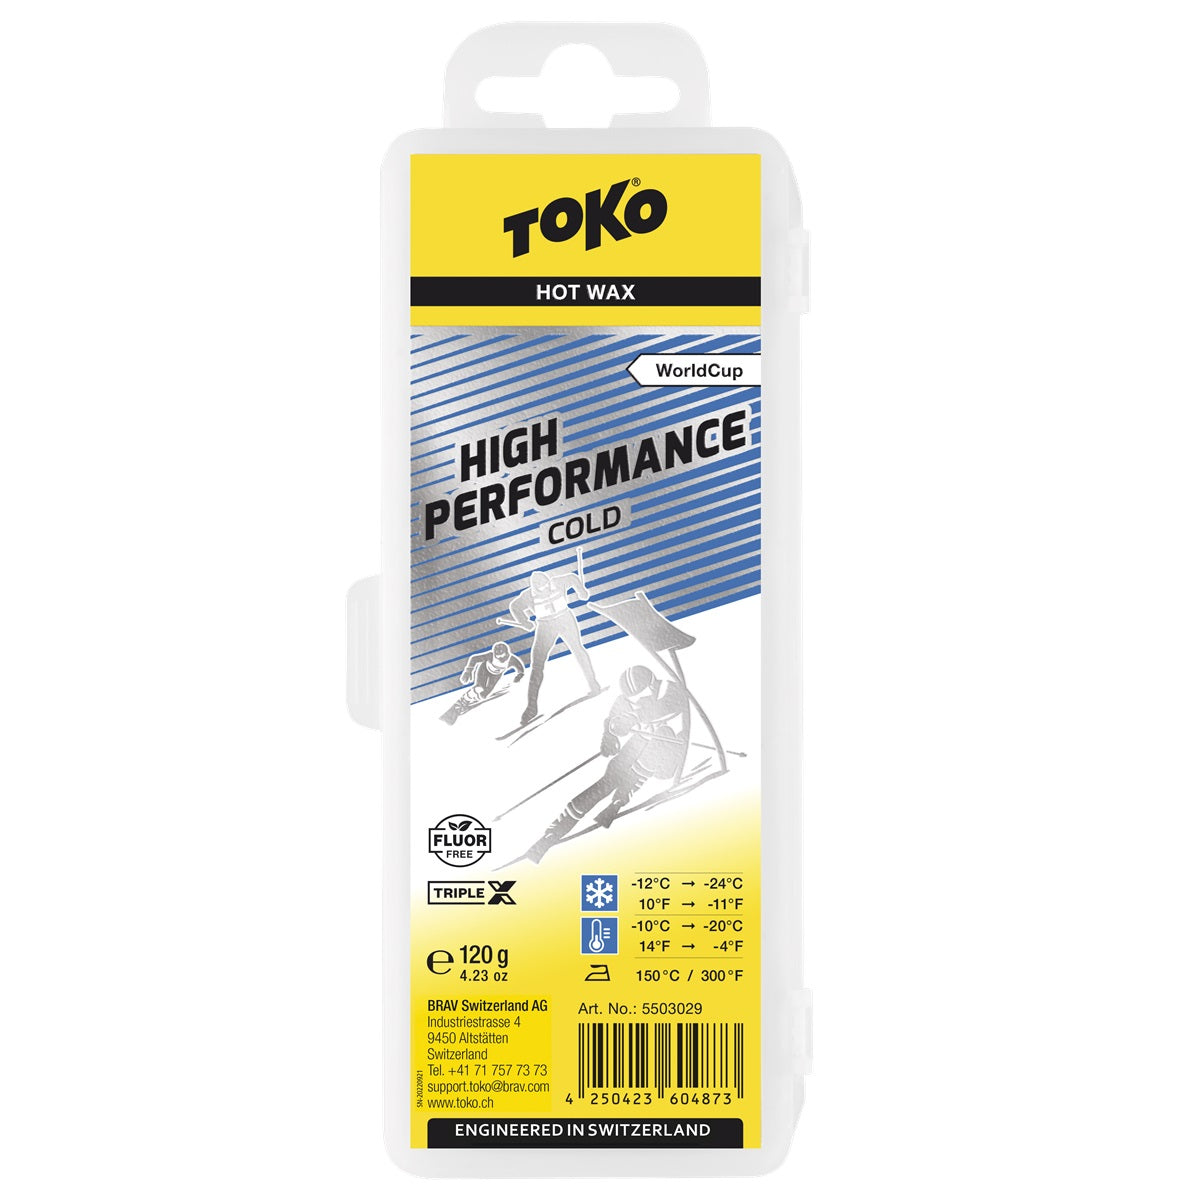 Toko vasks High Performance Hot Wax cold 120g